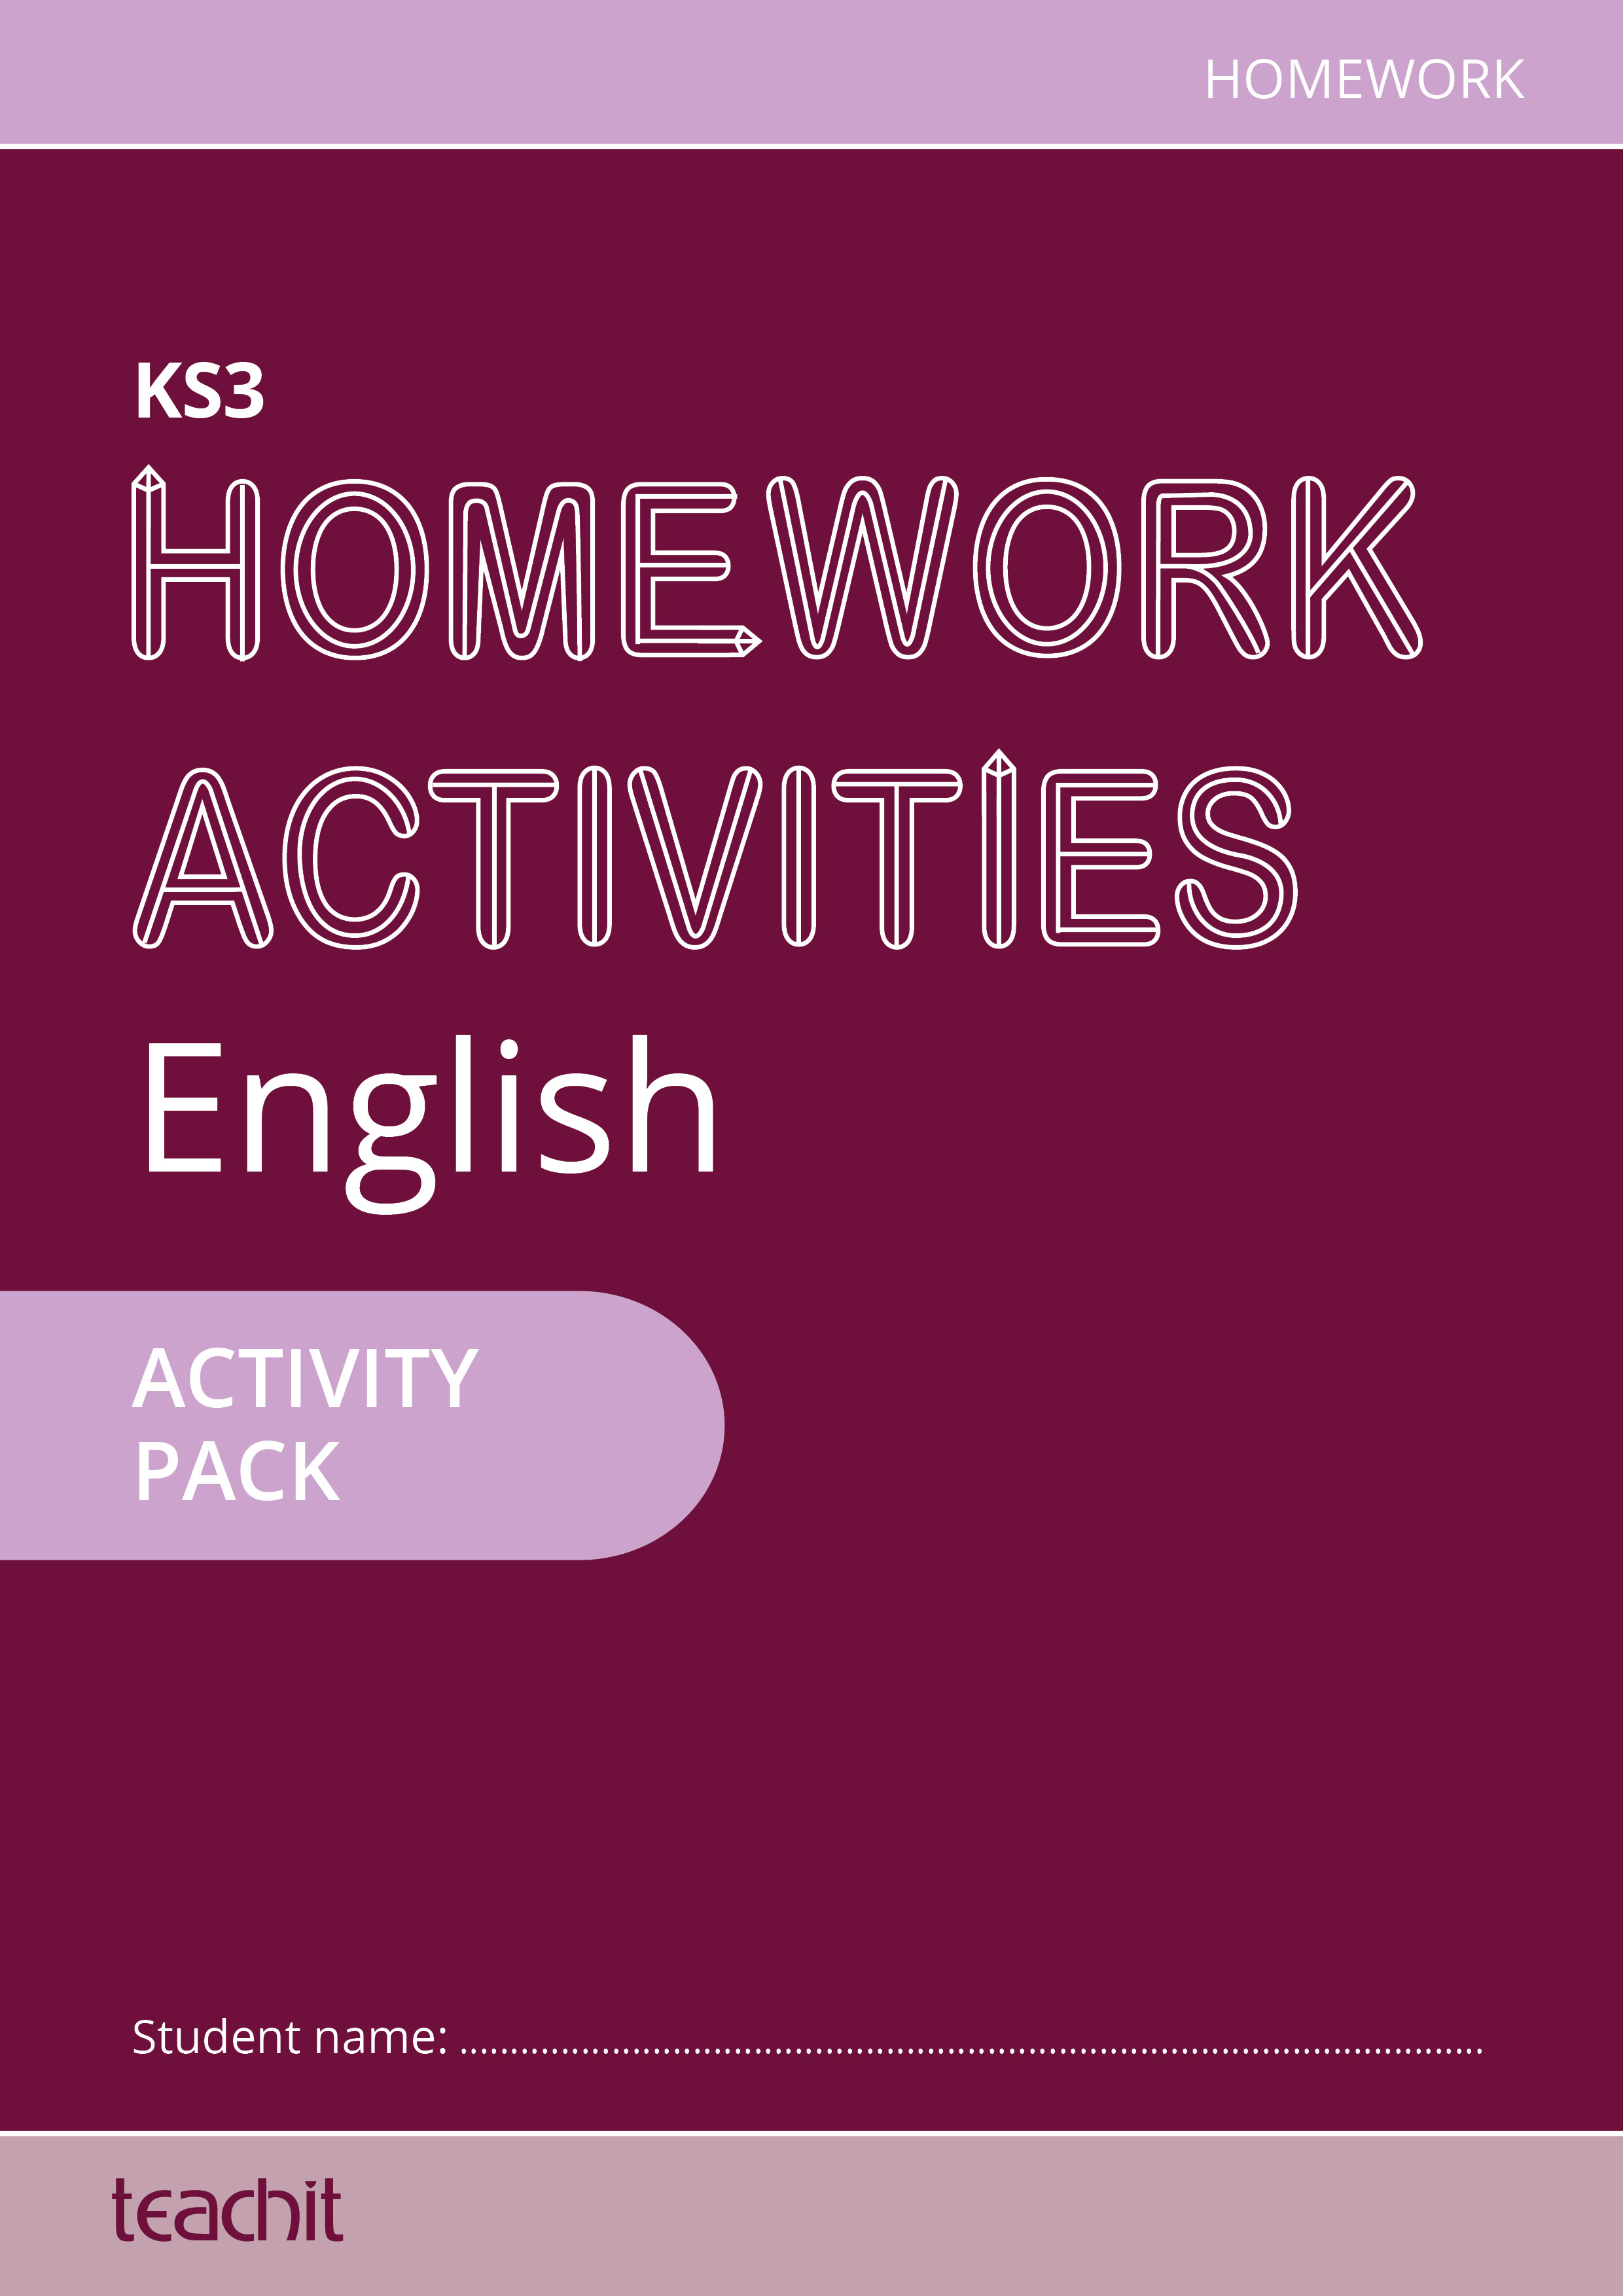 year 7 english homework booklet pdf